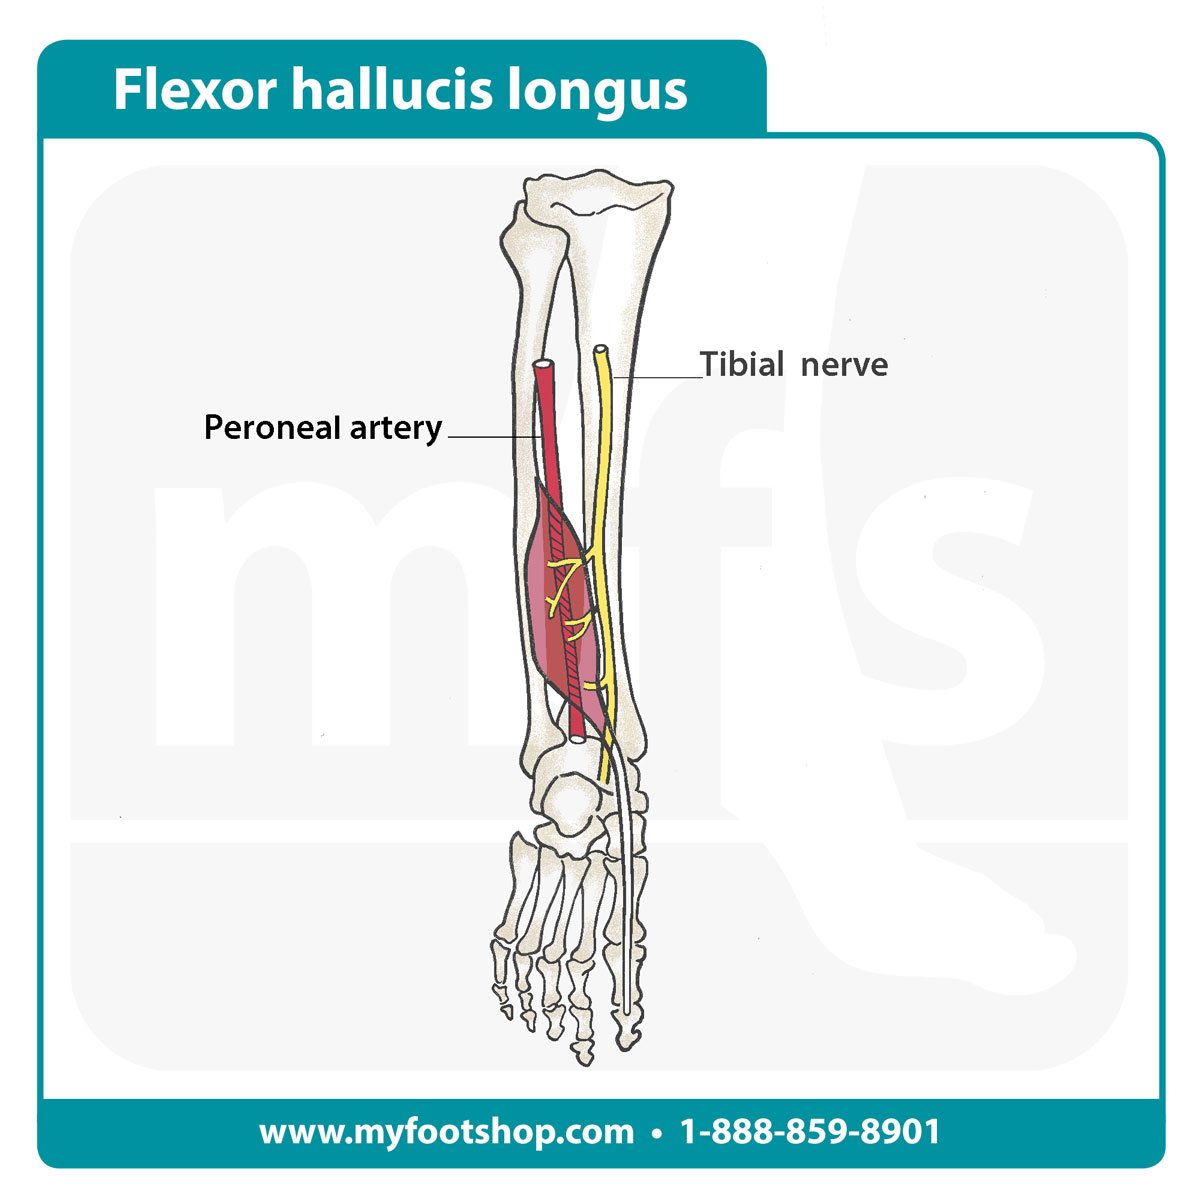 Image of the flexor hallucis longus muscle and tendon